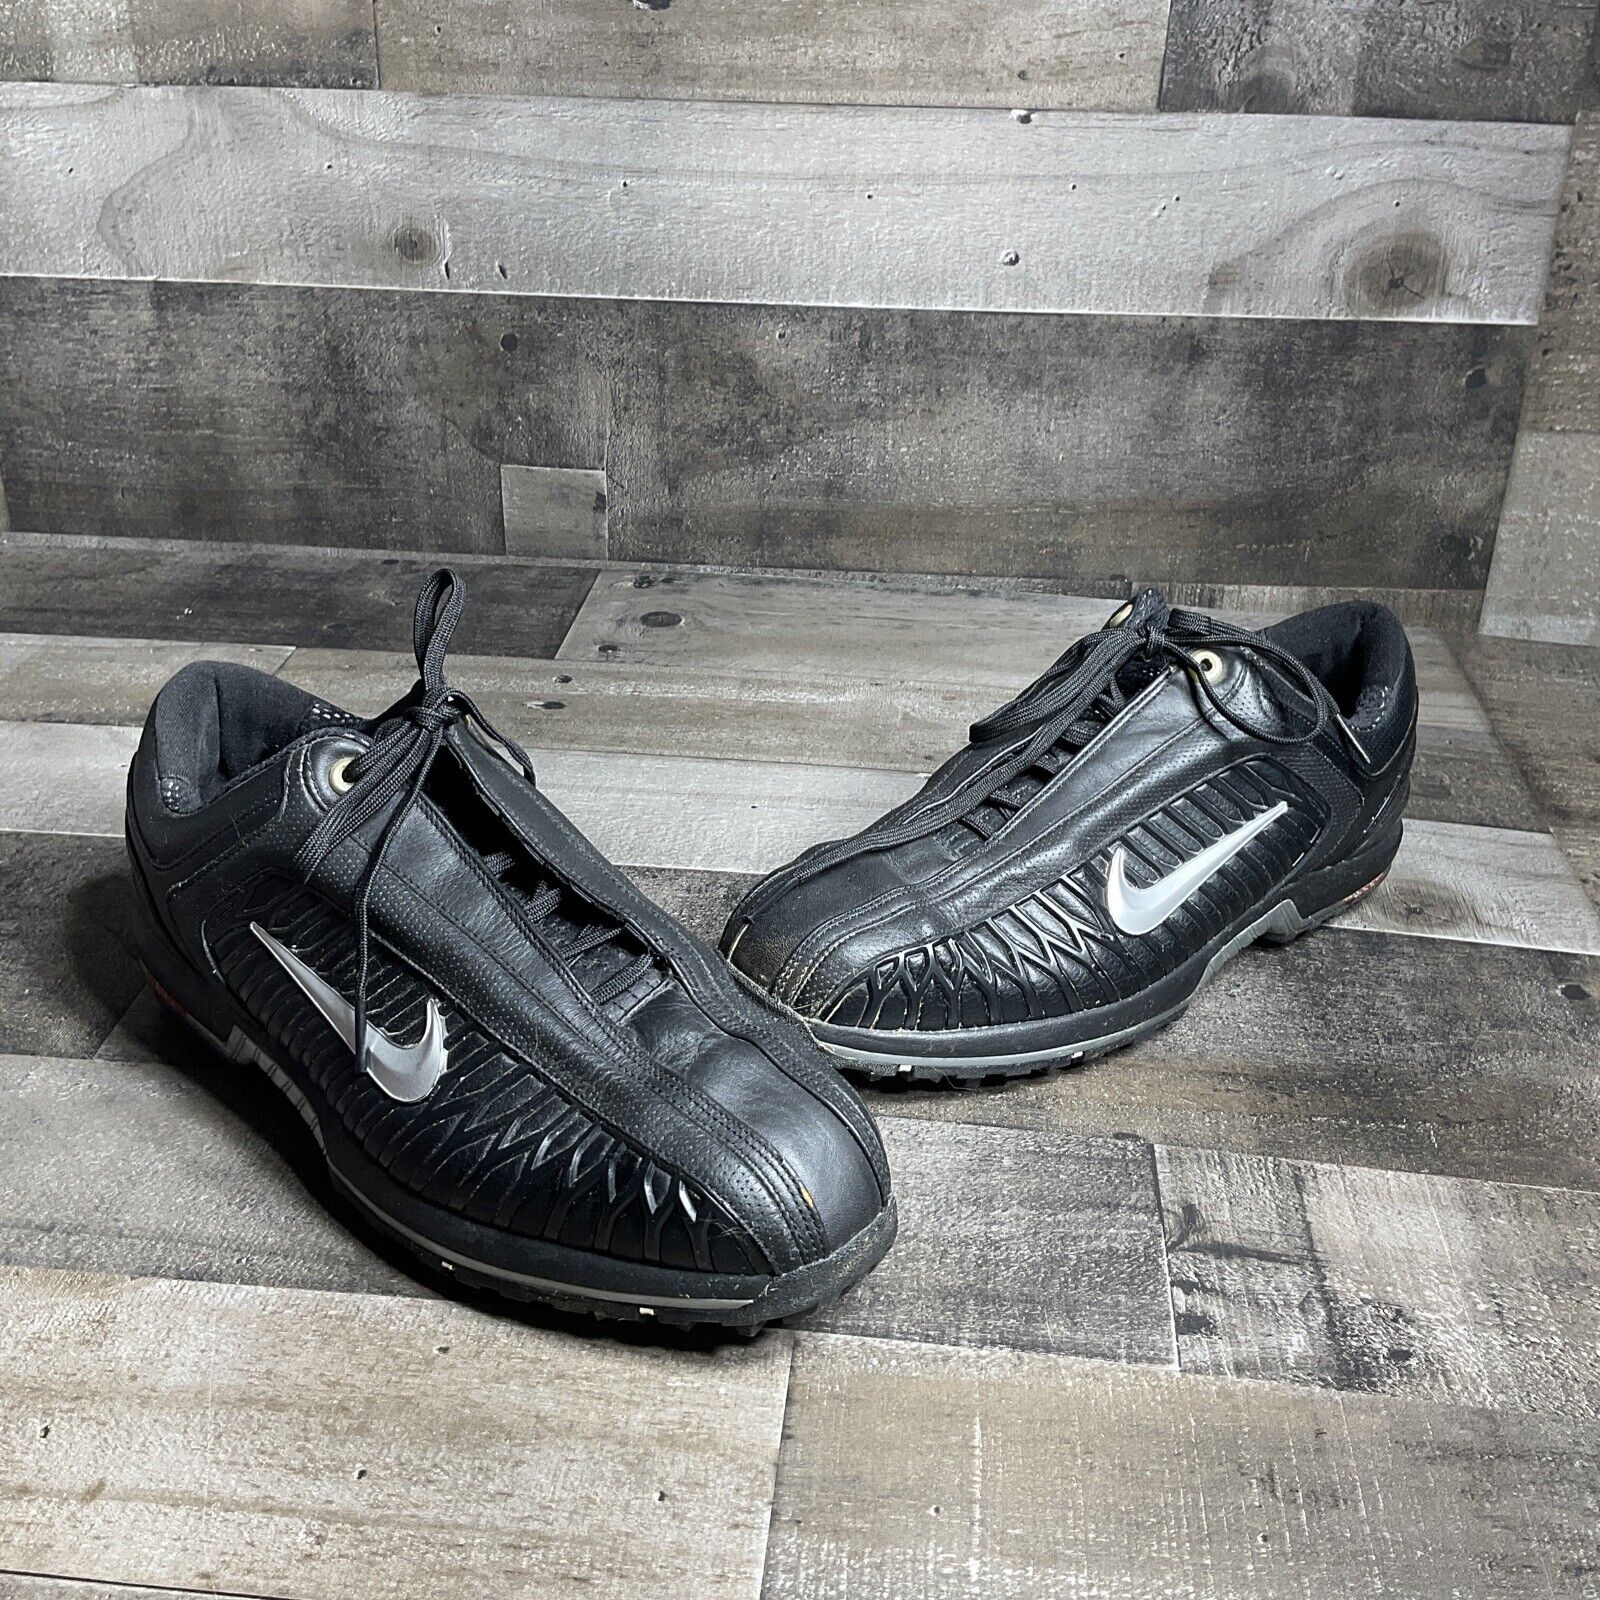 Nike Golf Shoes Mens 9.5 Black Air Zoom Elite II Tiger Woods 336036-001 Cleats